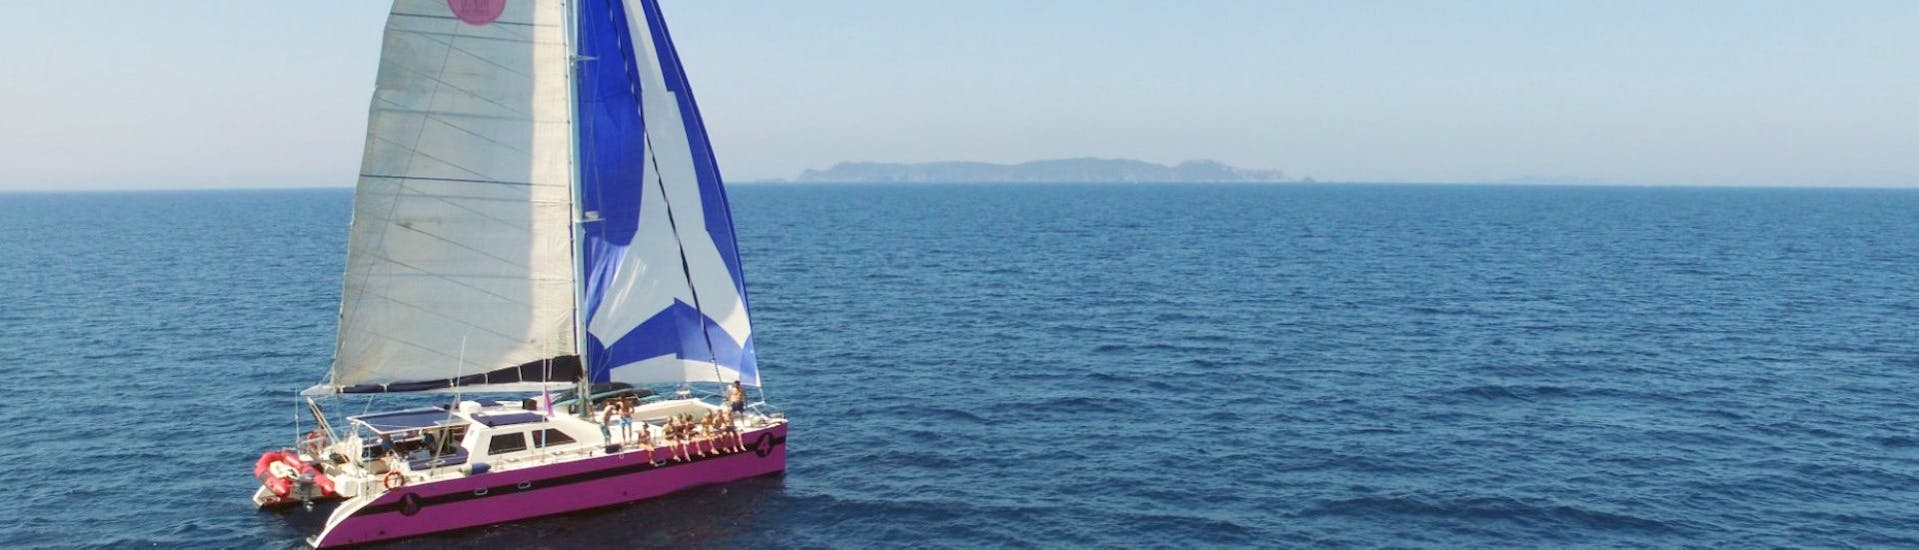 View during the Party Catamaran Trip in the Gulf of Saint-Tropez with Caseneuve Maxi Catamaran.